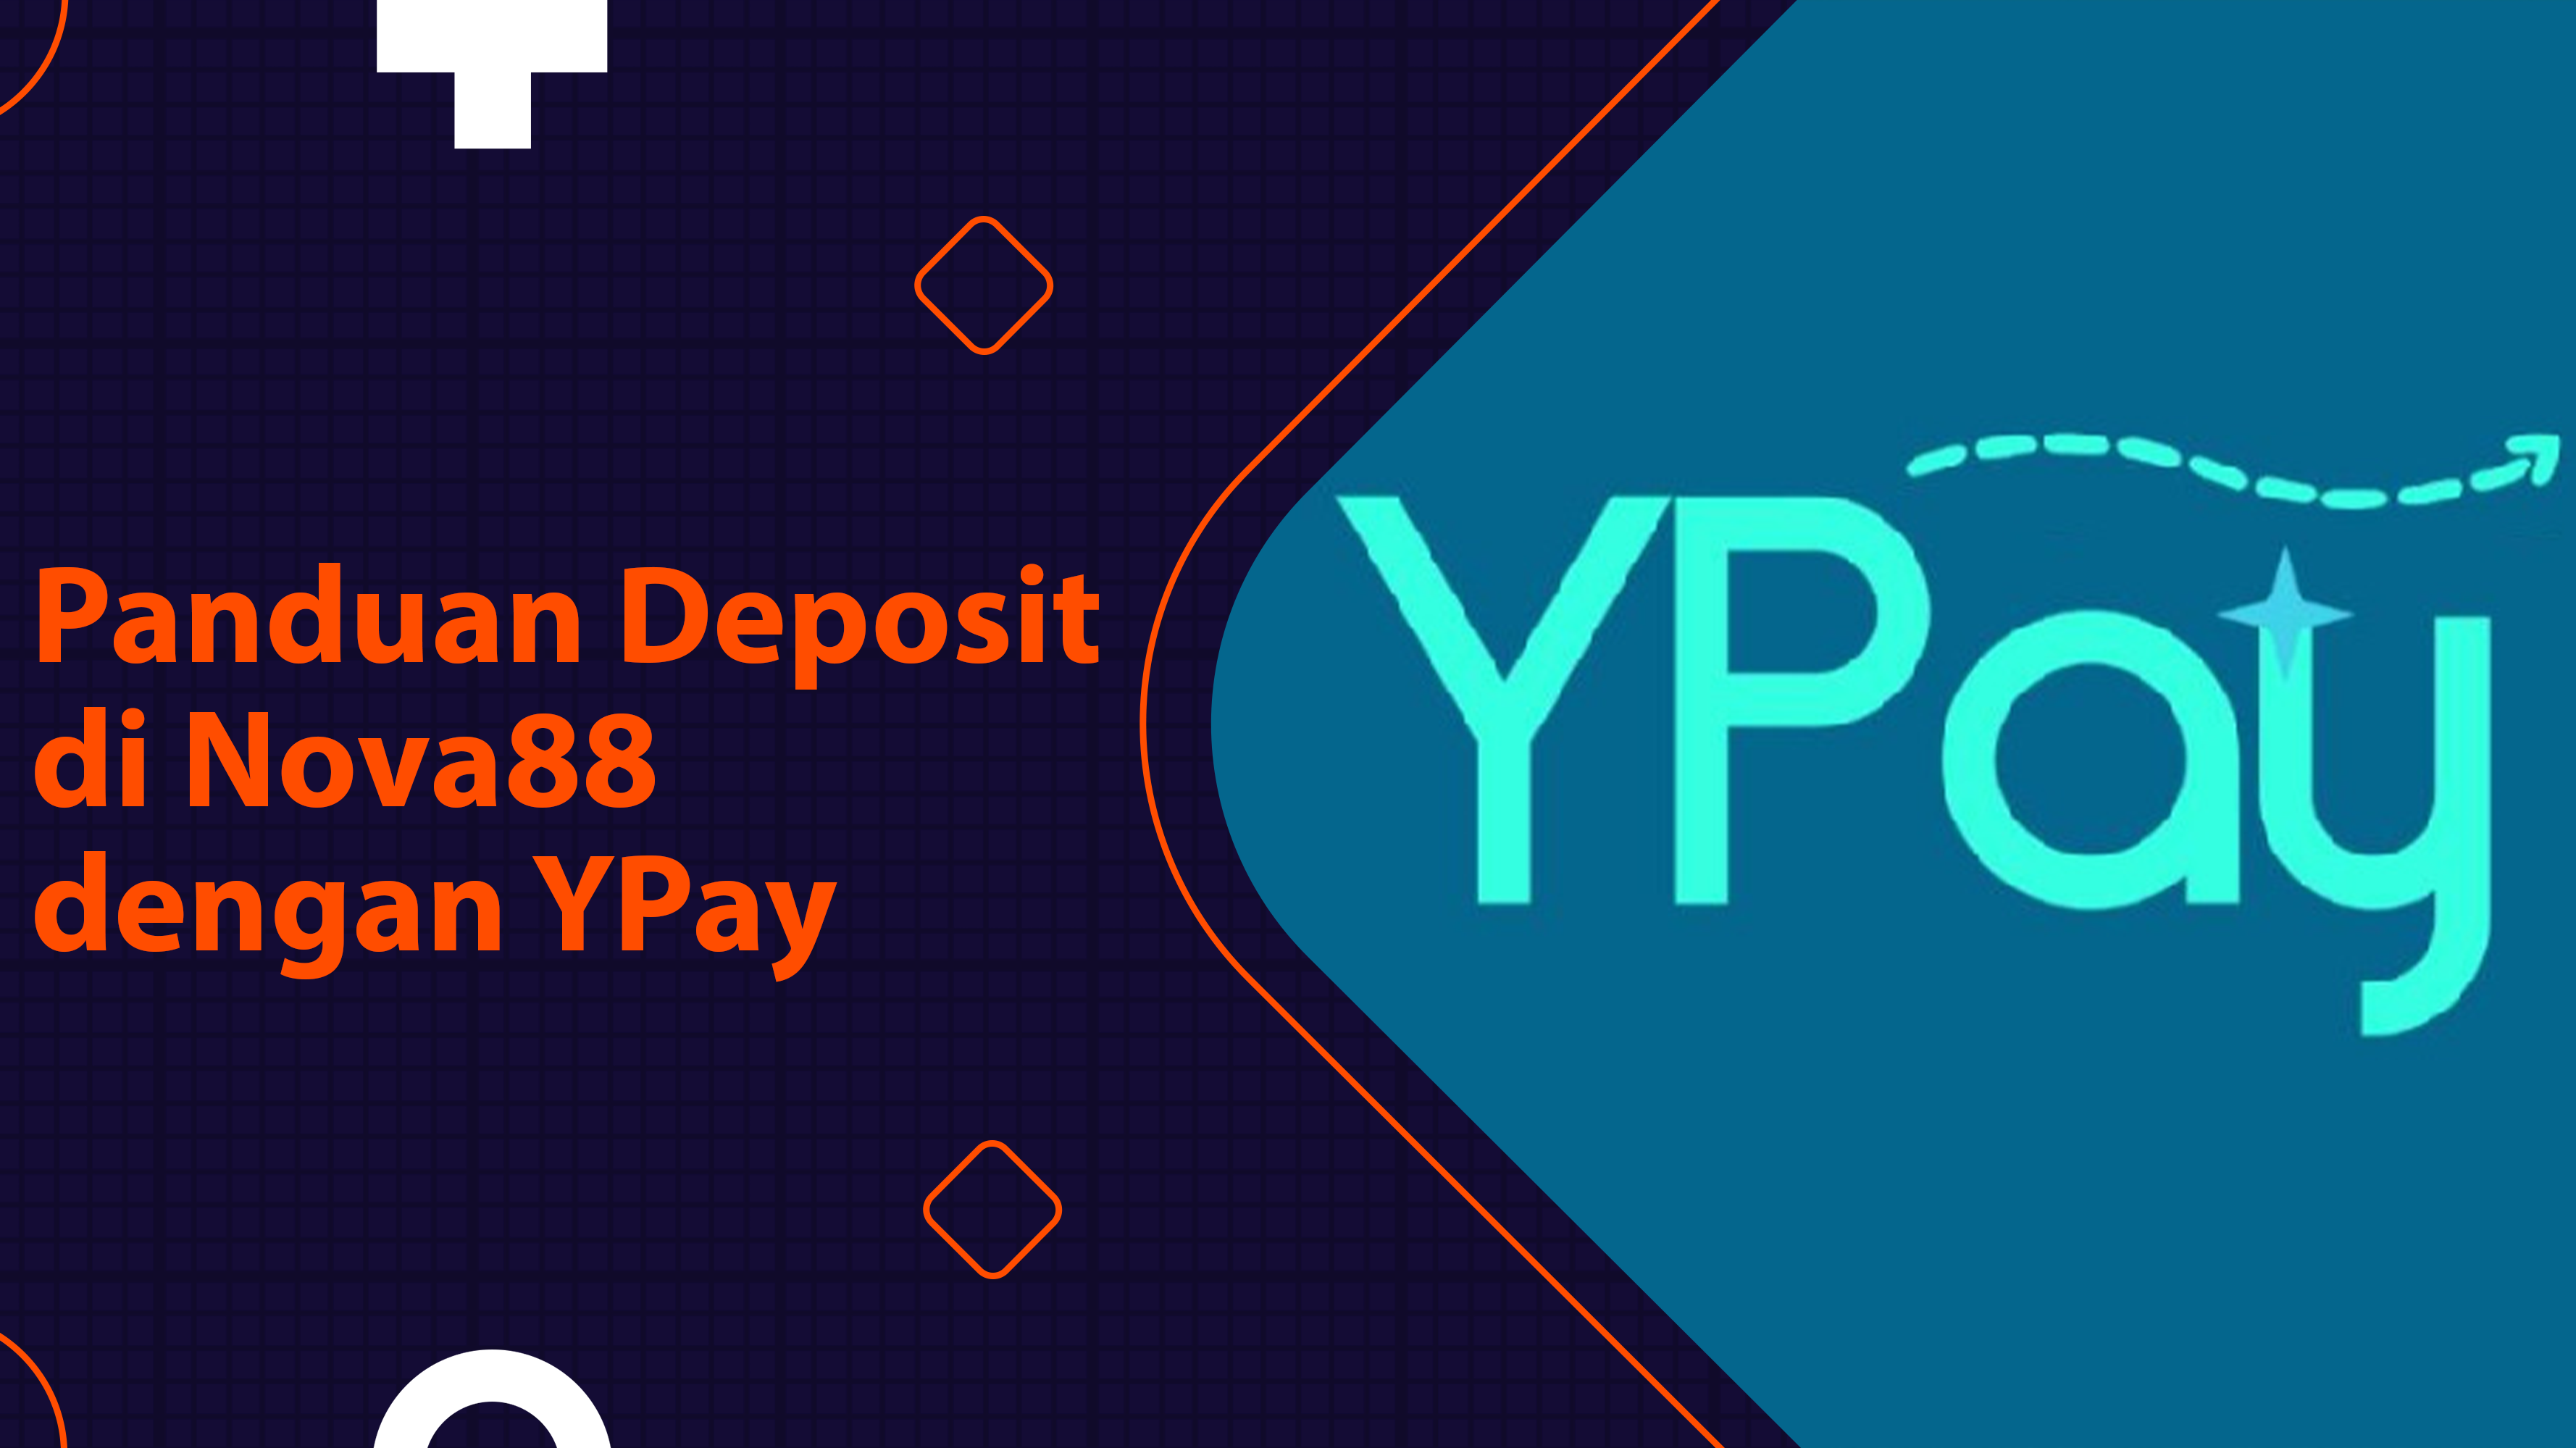 Panduan Deposit di Nova88 dengan YPay